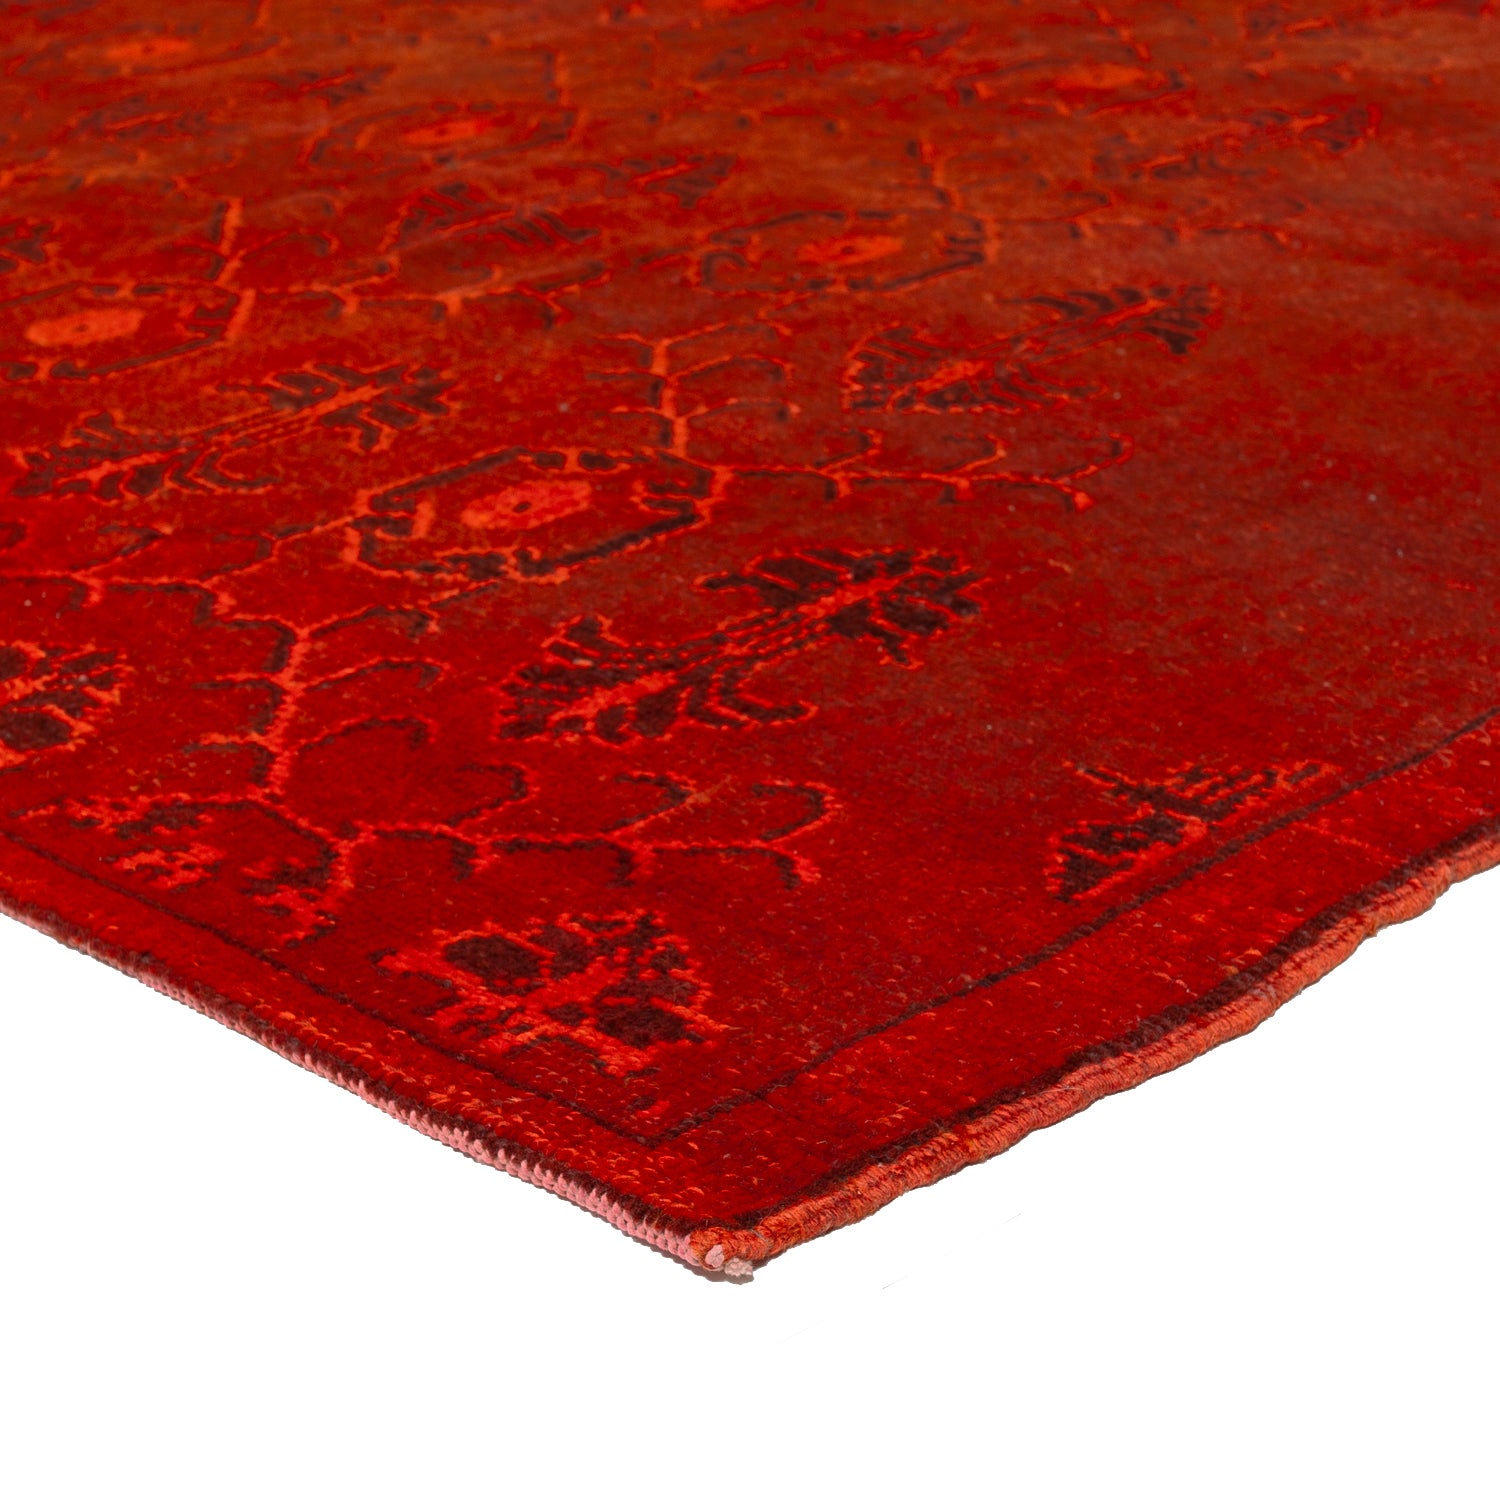 Intricate red carpet with symmetrical botanical patterns exudes elegance.